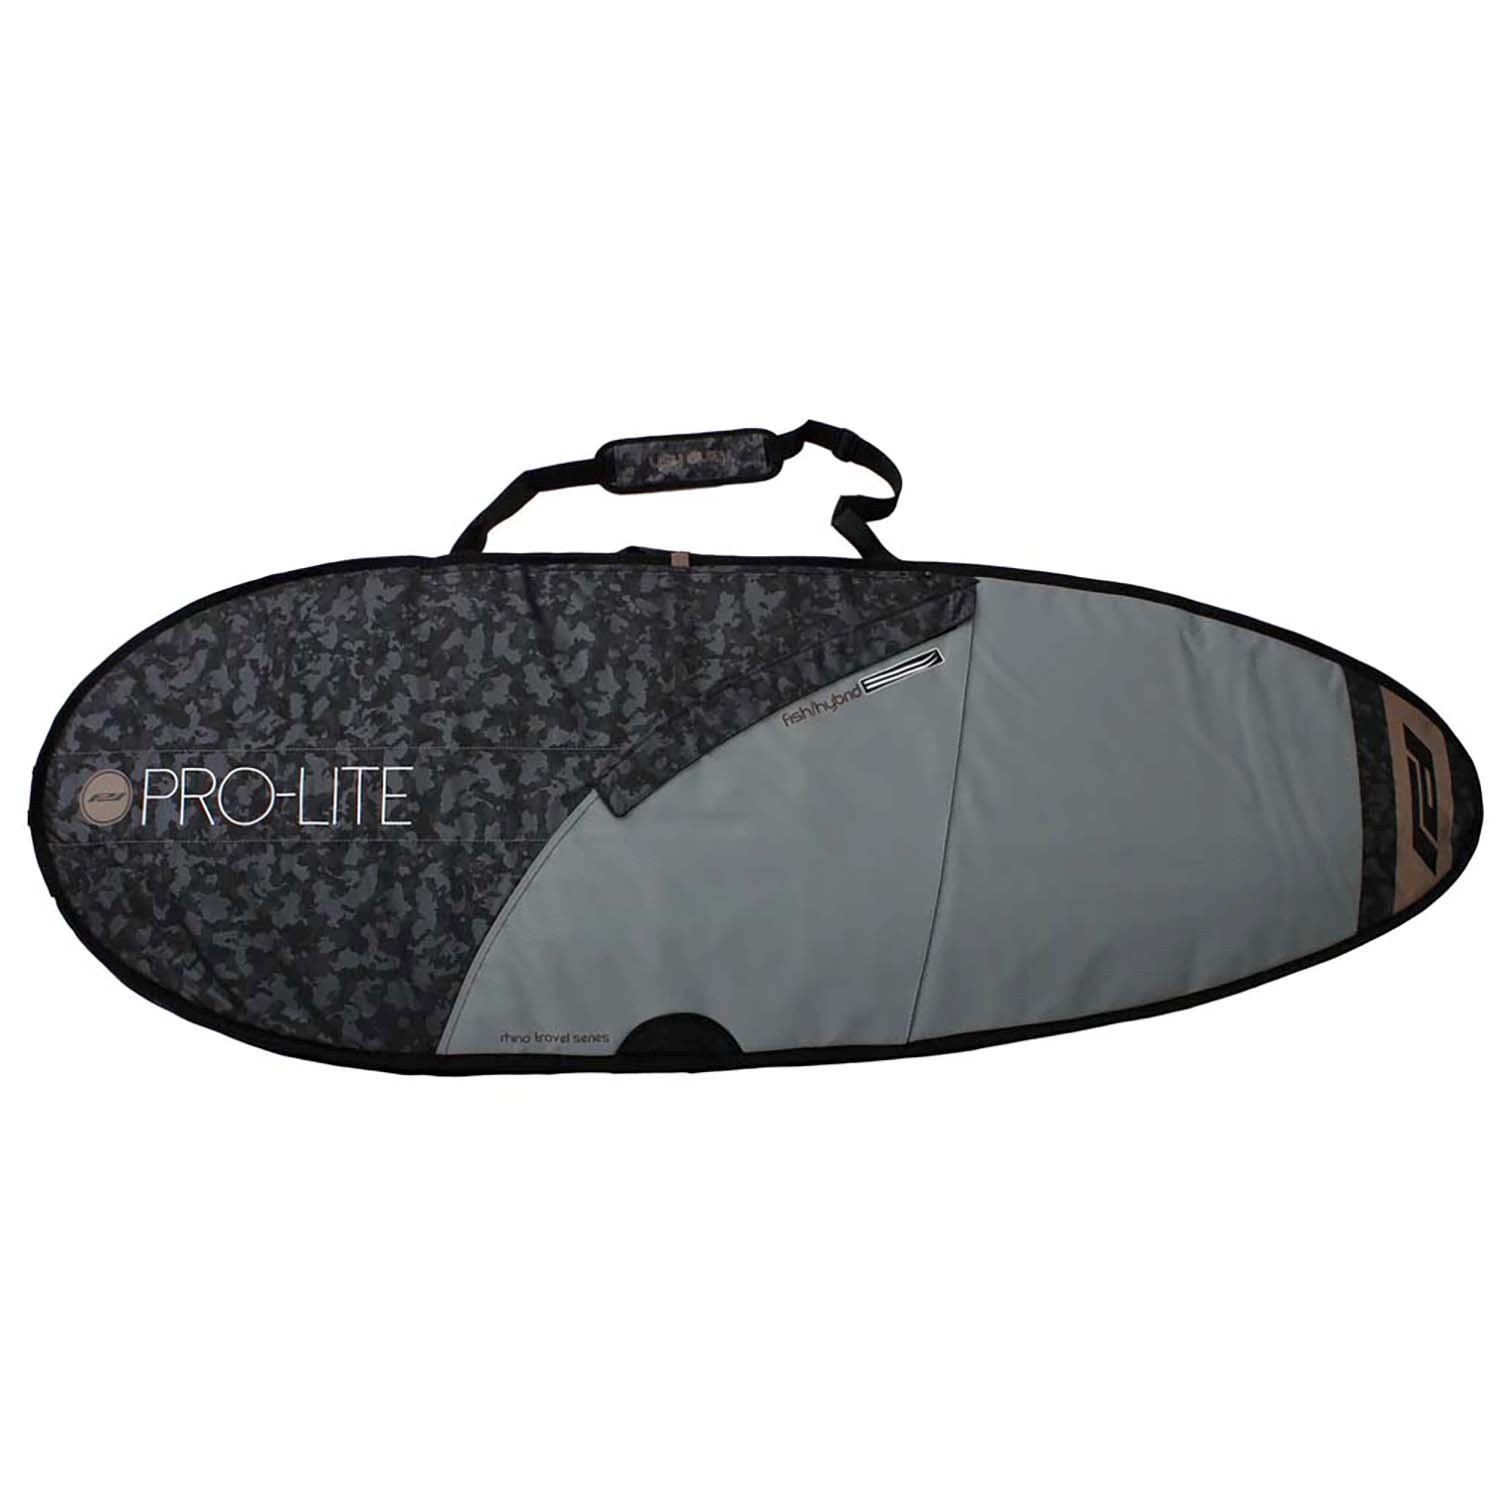 Pro-Lite Rhino Double Travel Surfboard Bag - Fish